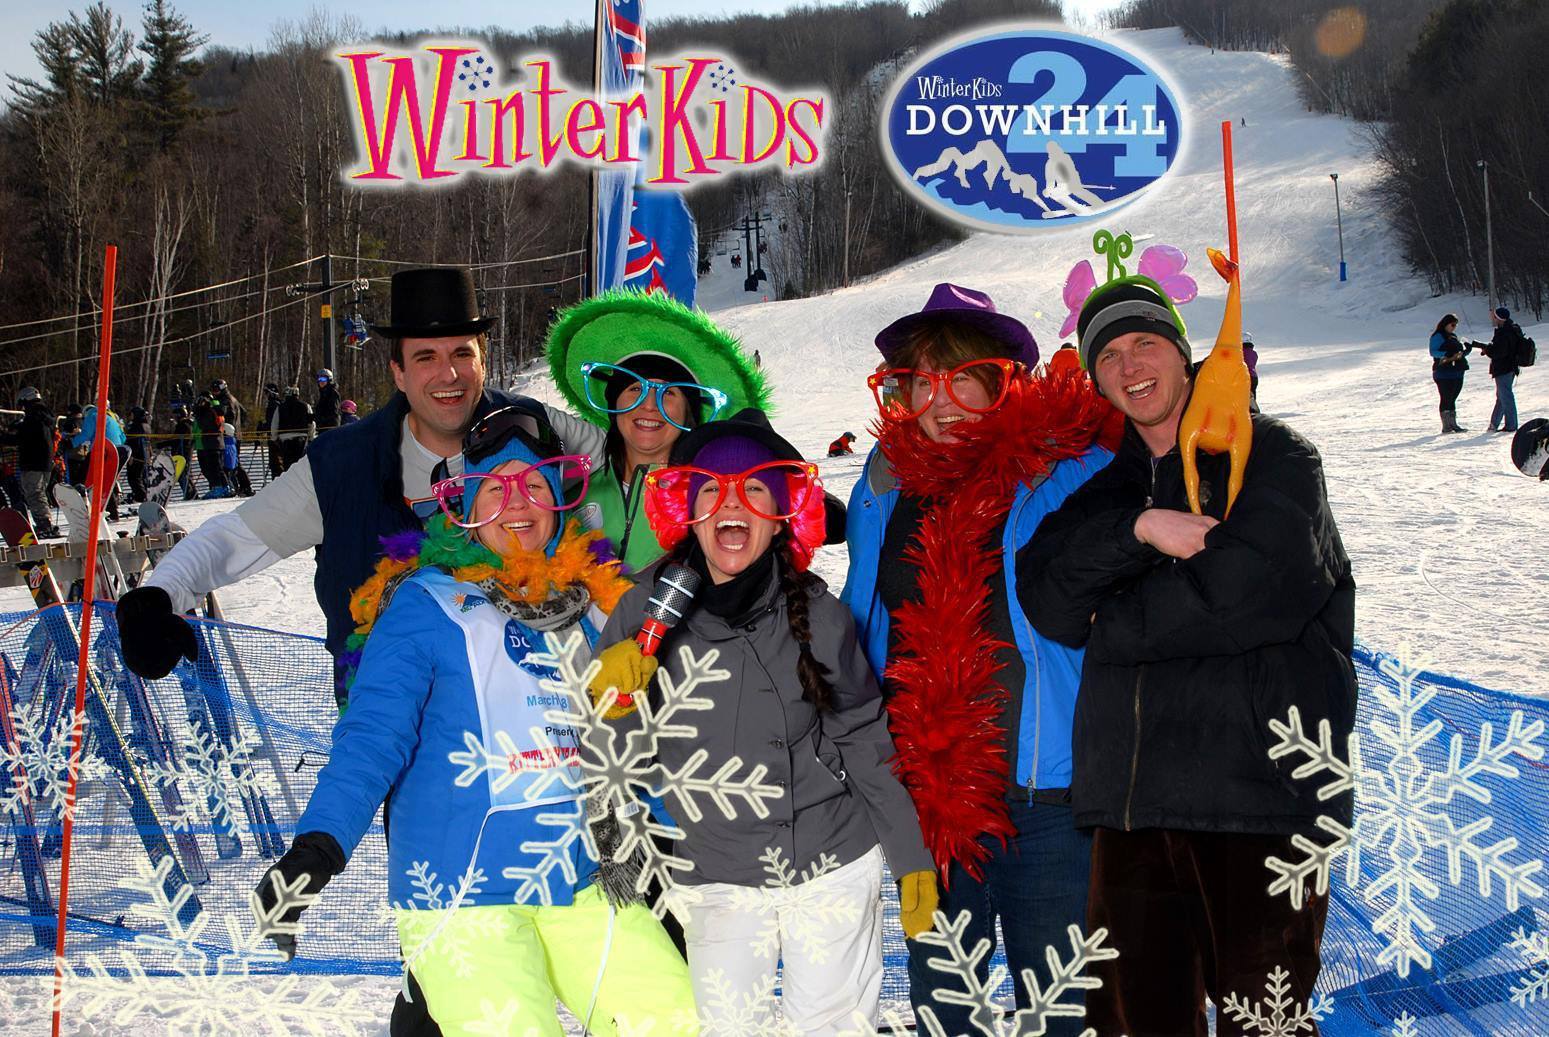 WinterKids Downhill24 2015 Photo Booth032